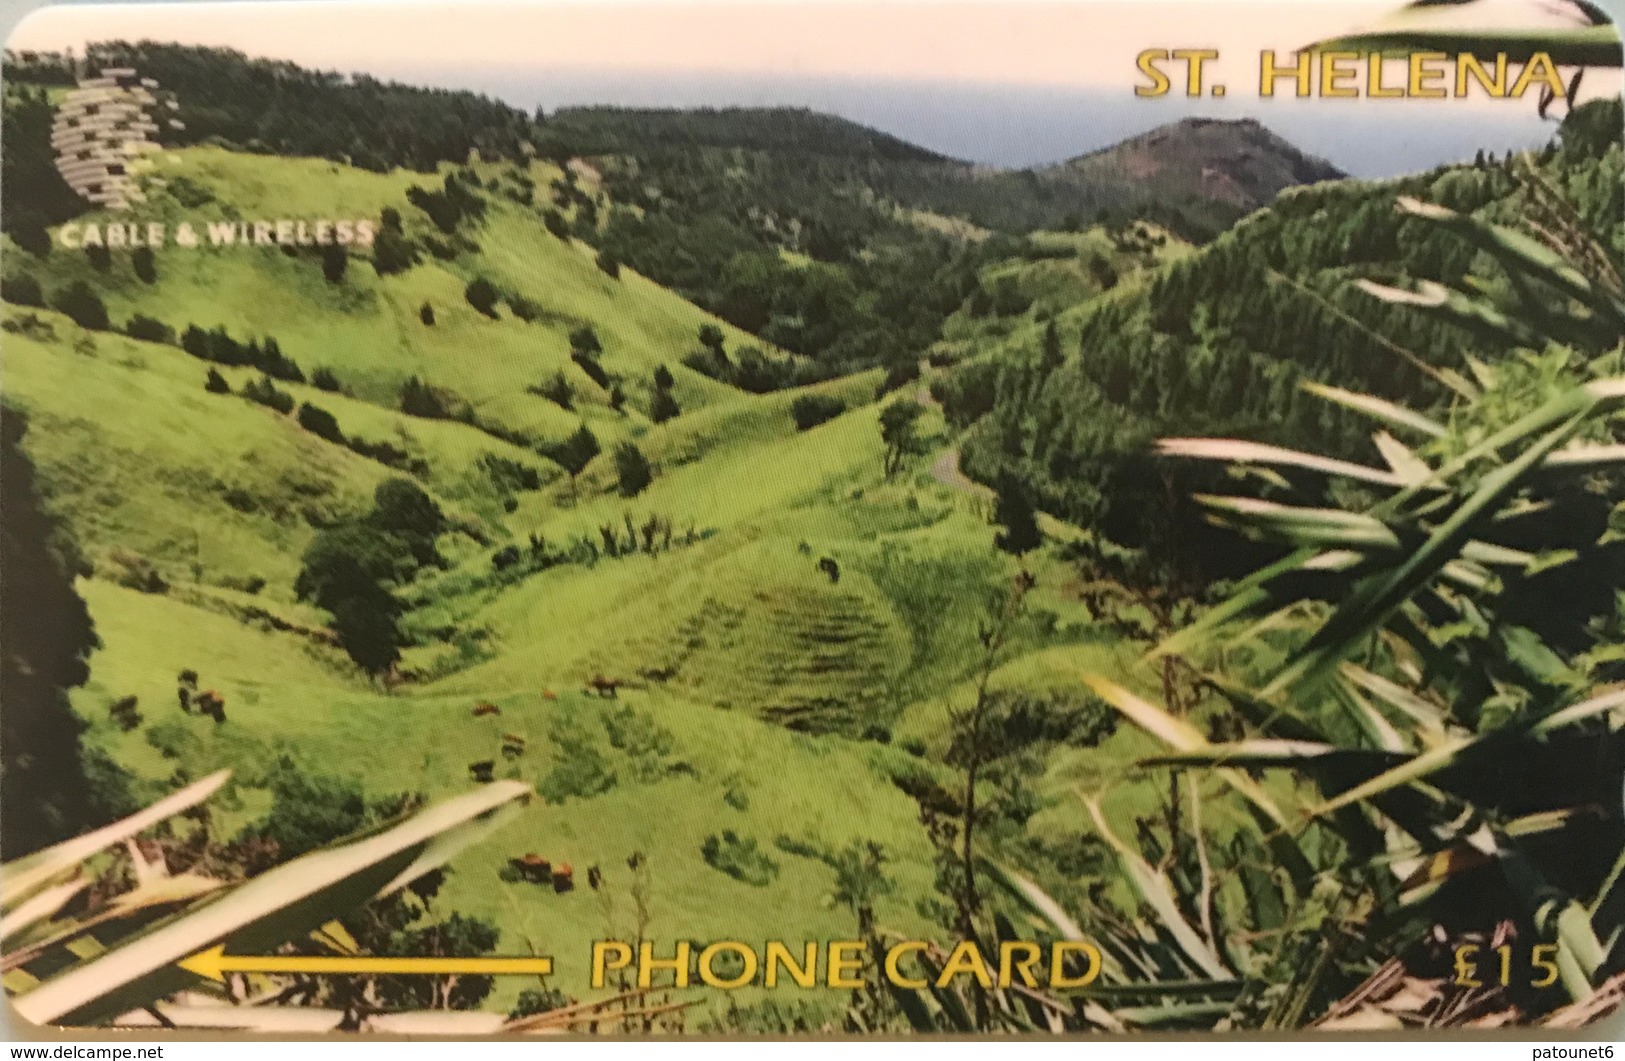 SAINTE-HELENE  -  Cable  § Wireless  -  " Former Governor "  -  £15,00 - St. Helena Island